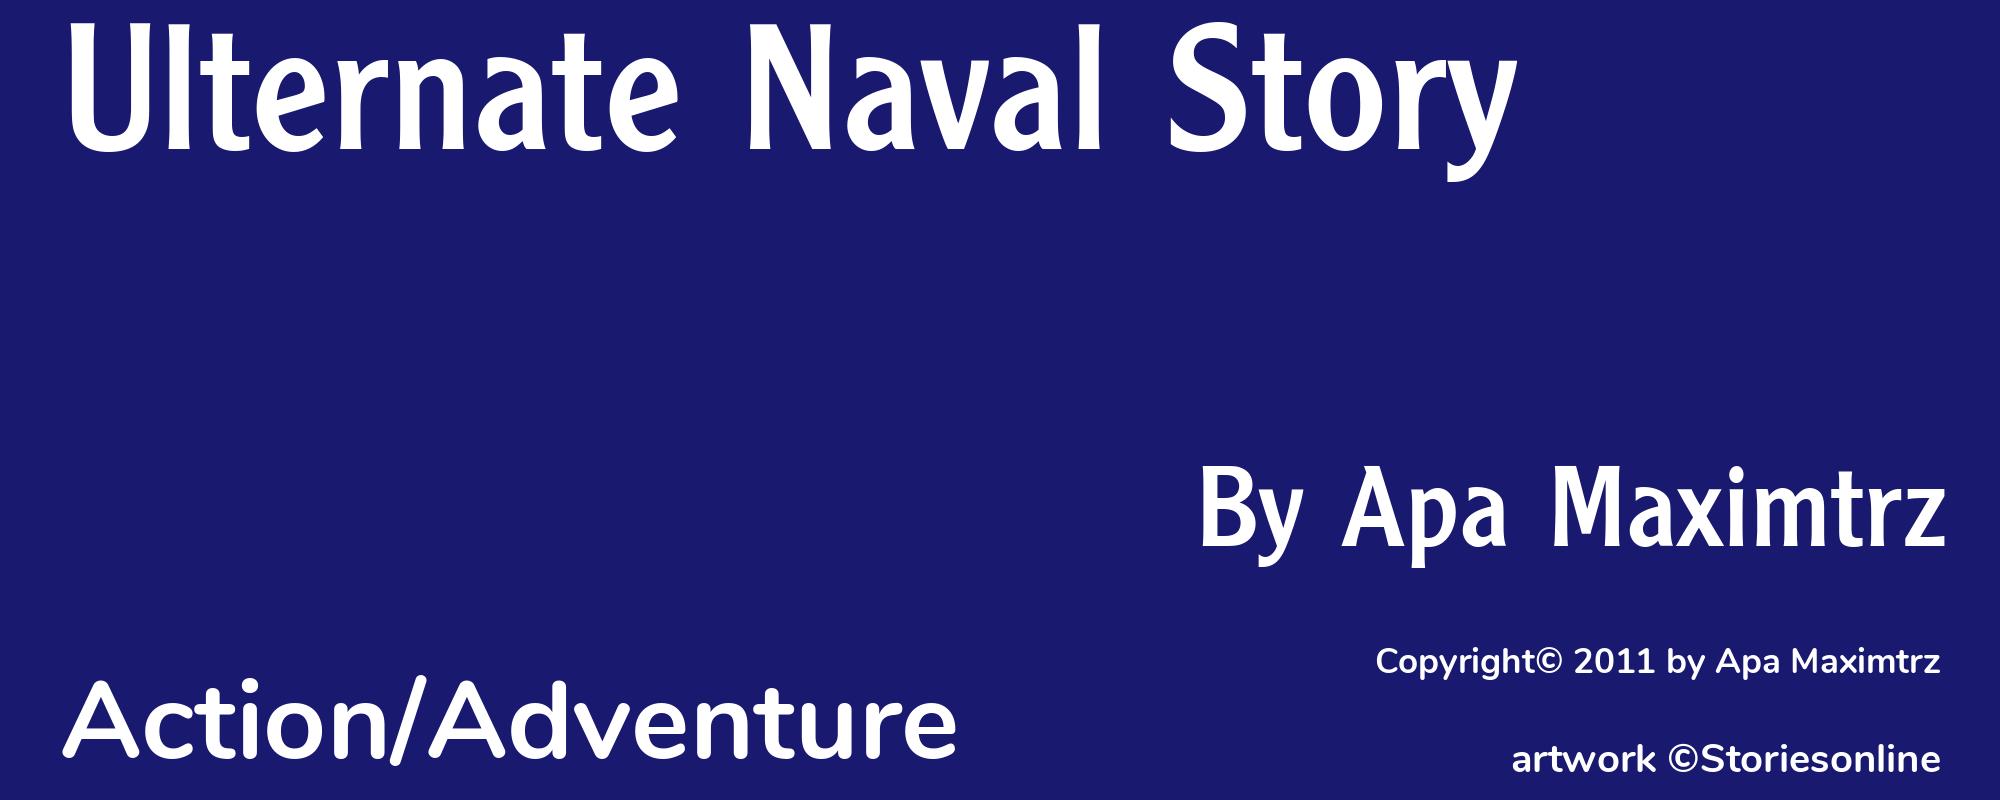 Ulternate Naval Story - Cover